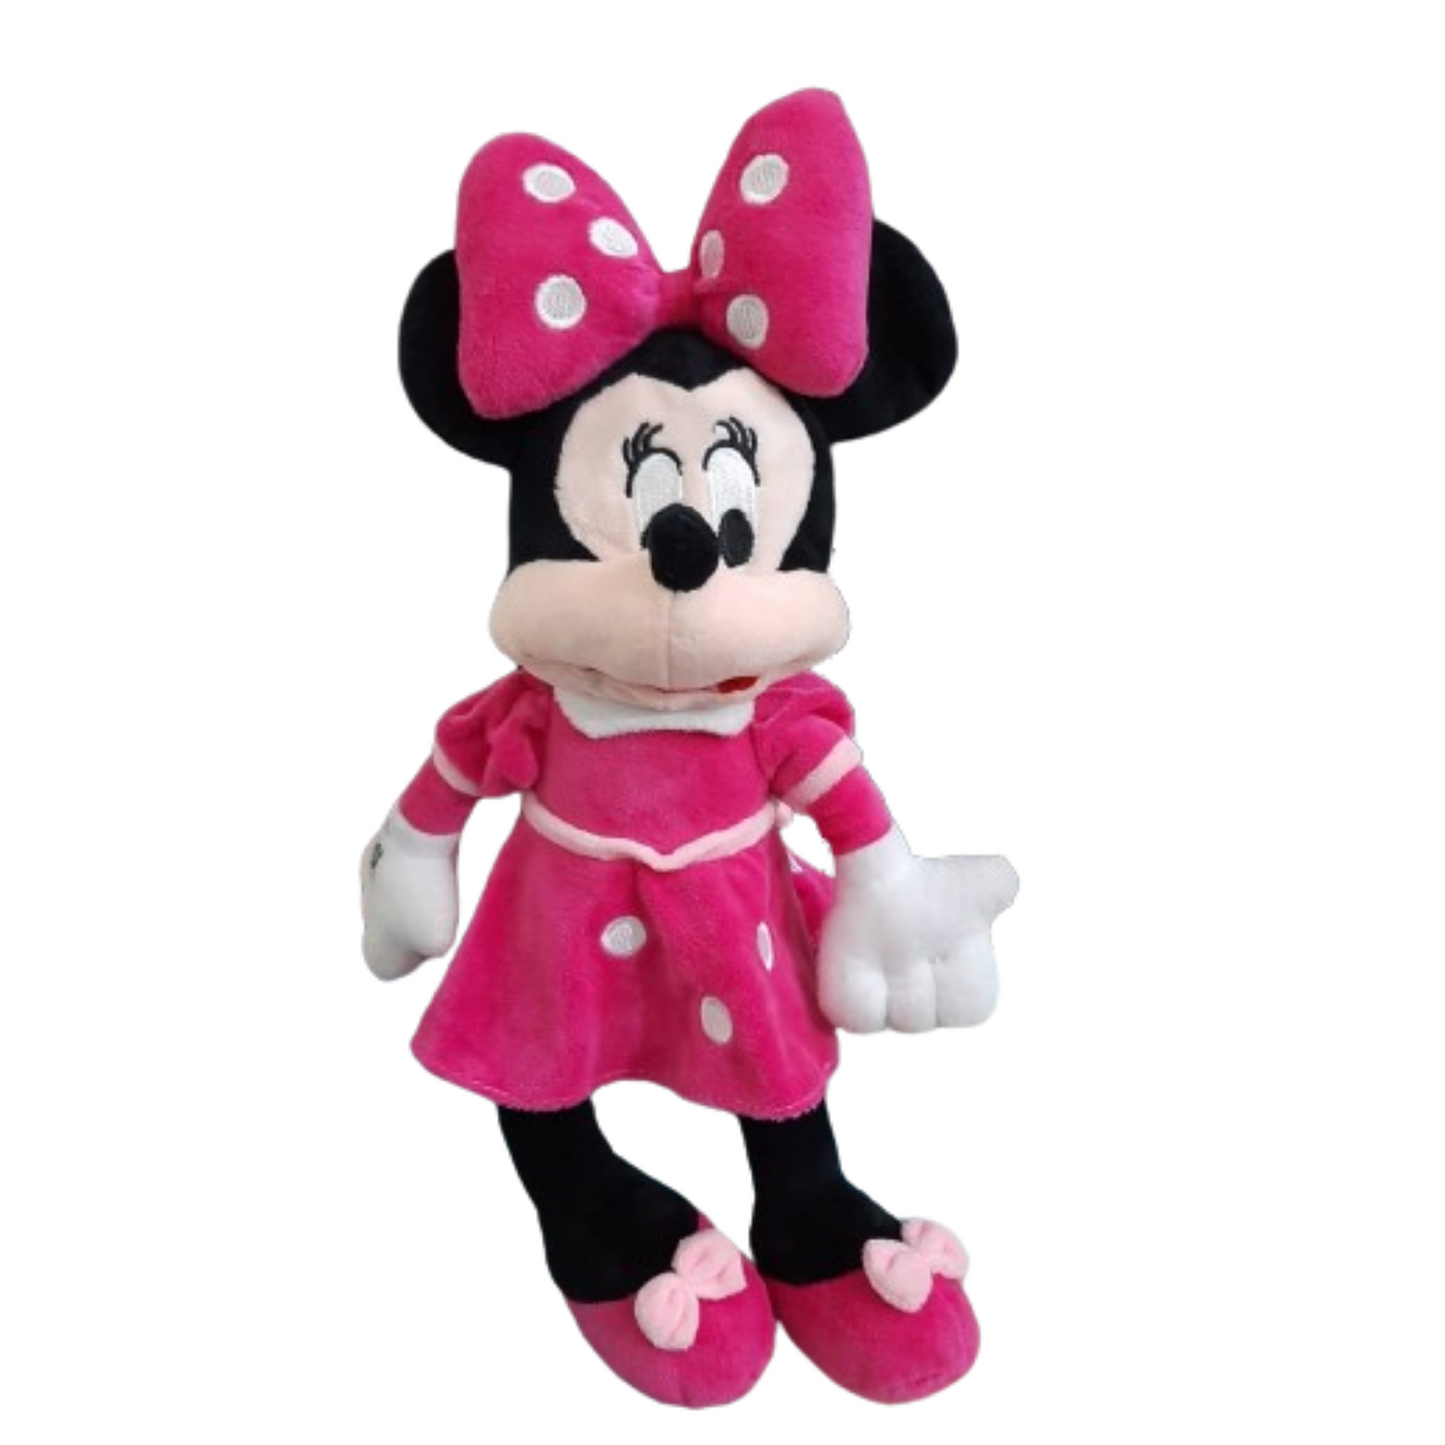 Mini- Mouse Stuffed Toy